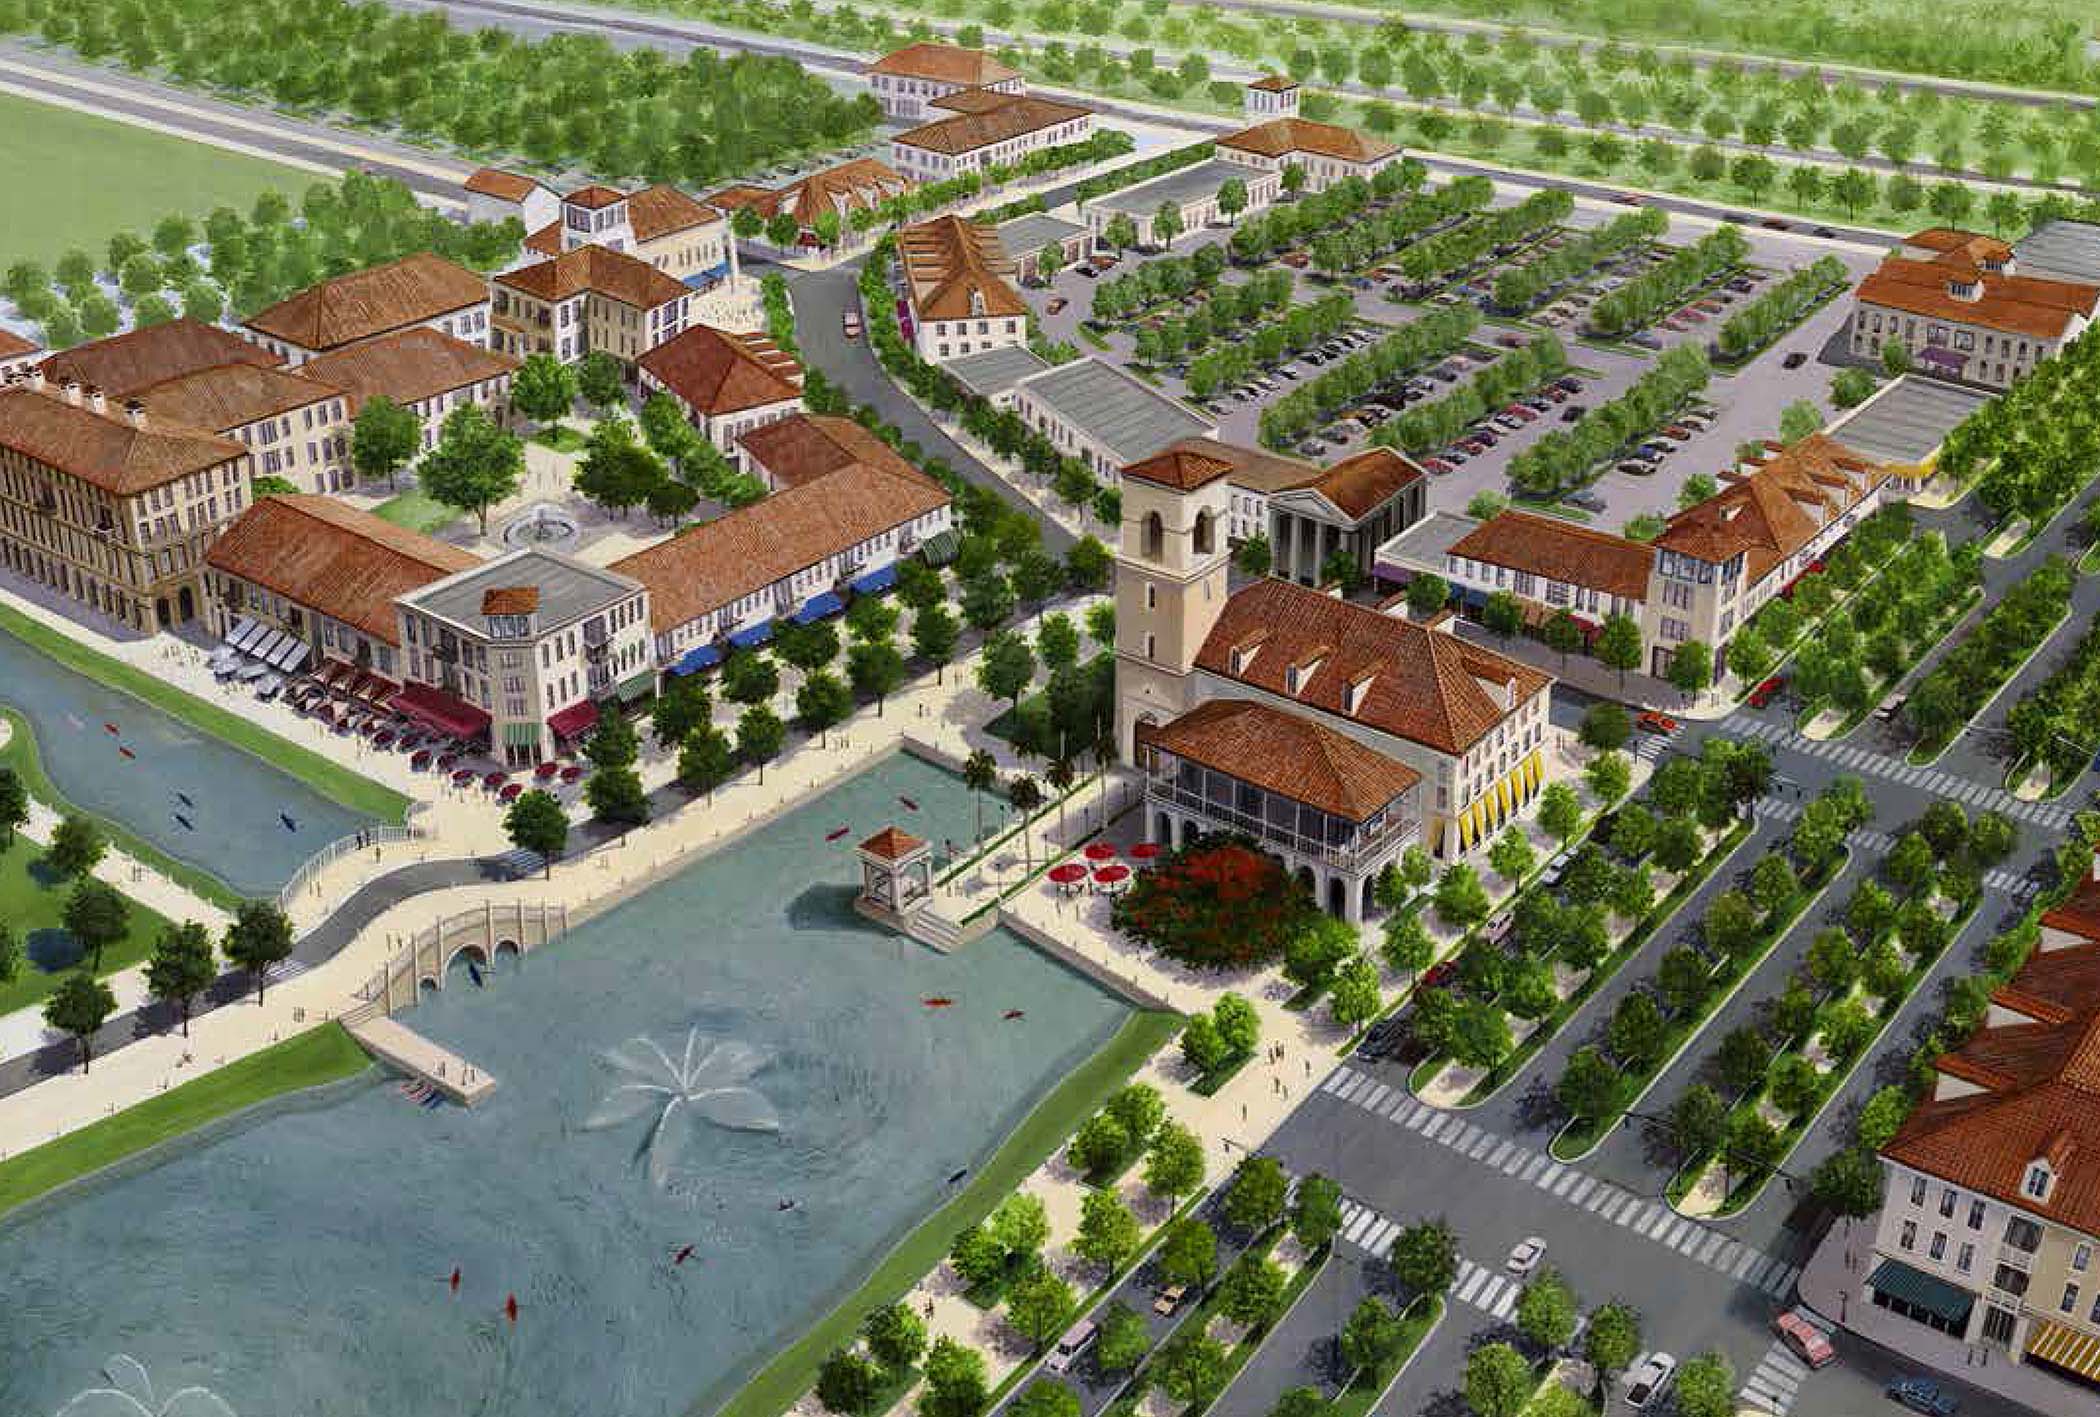 Revised development plans for 7.4-square-mile Avenir go public in Palm Beach Gardens